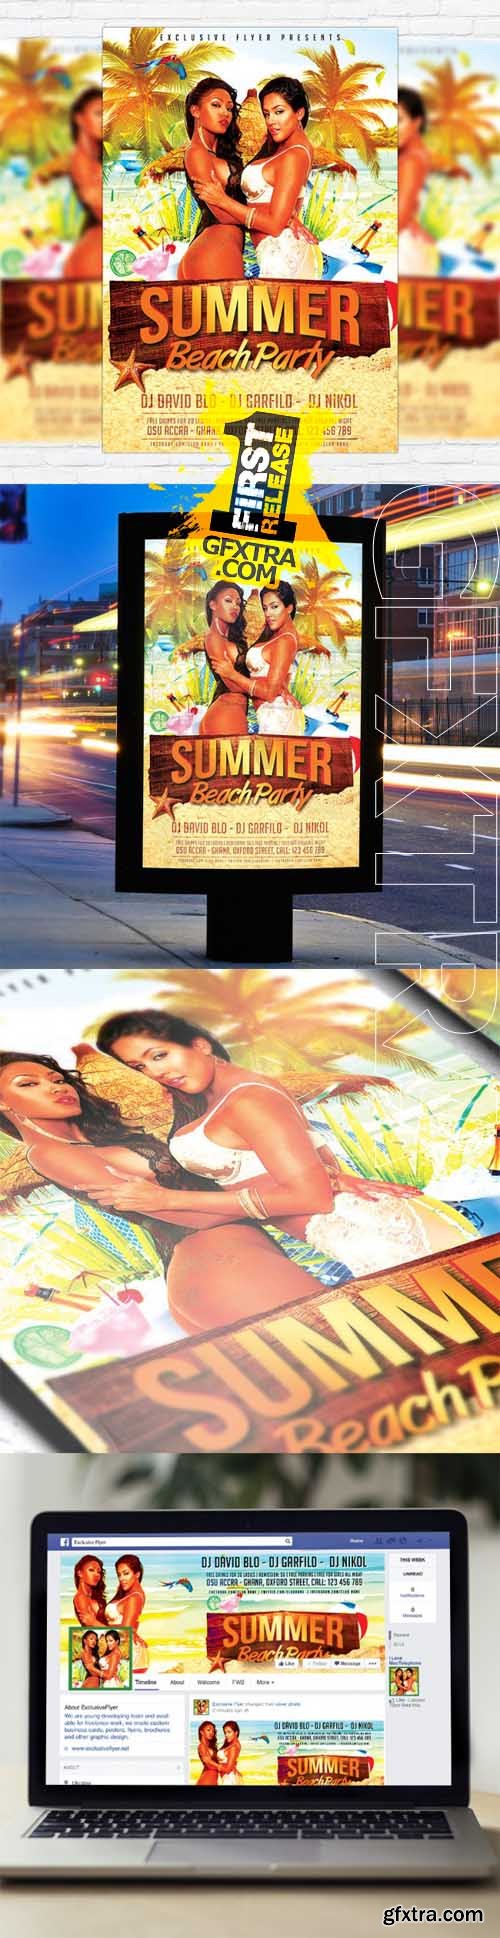 Summer Beach Party 3 - Flyer Template + Facebook Cover